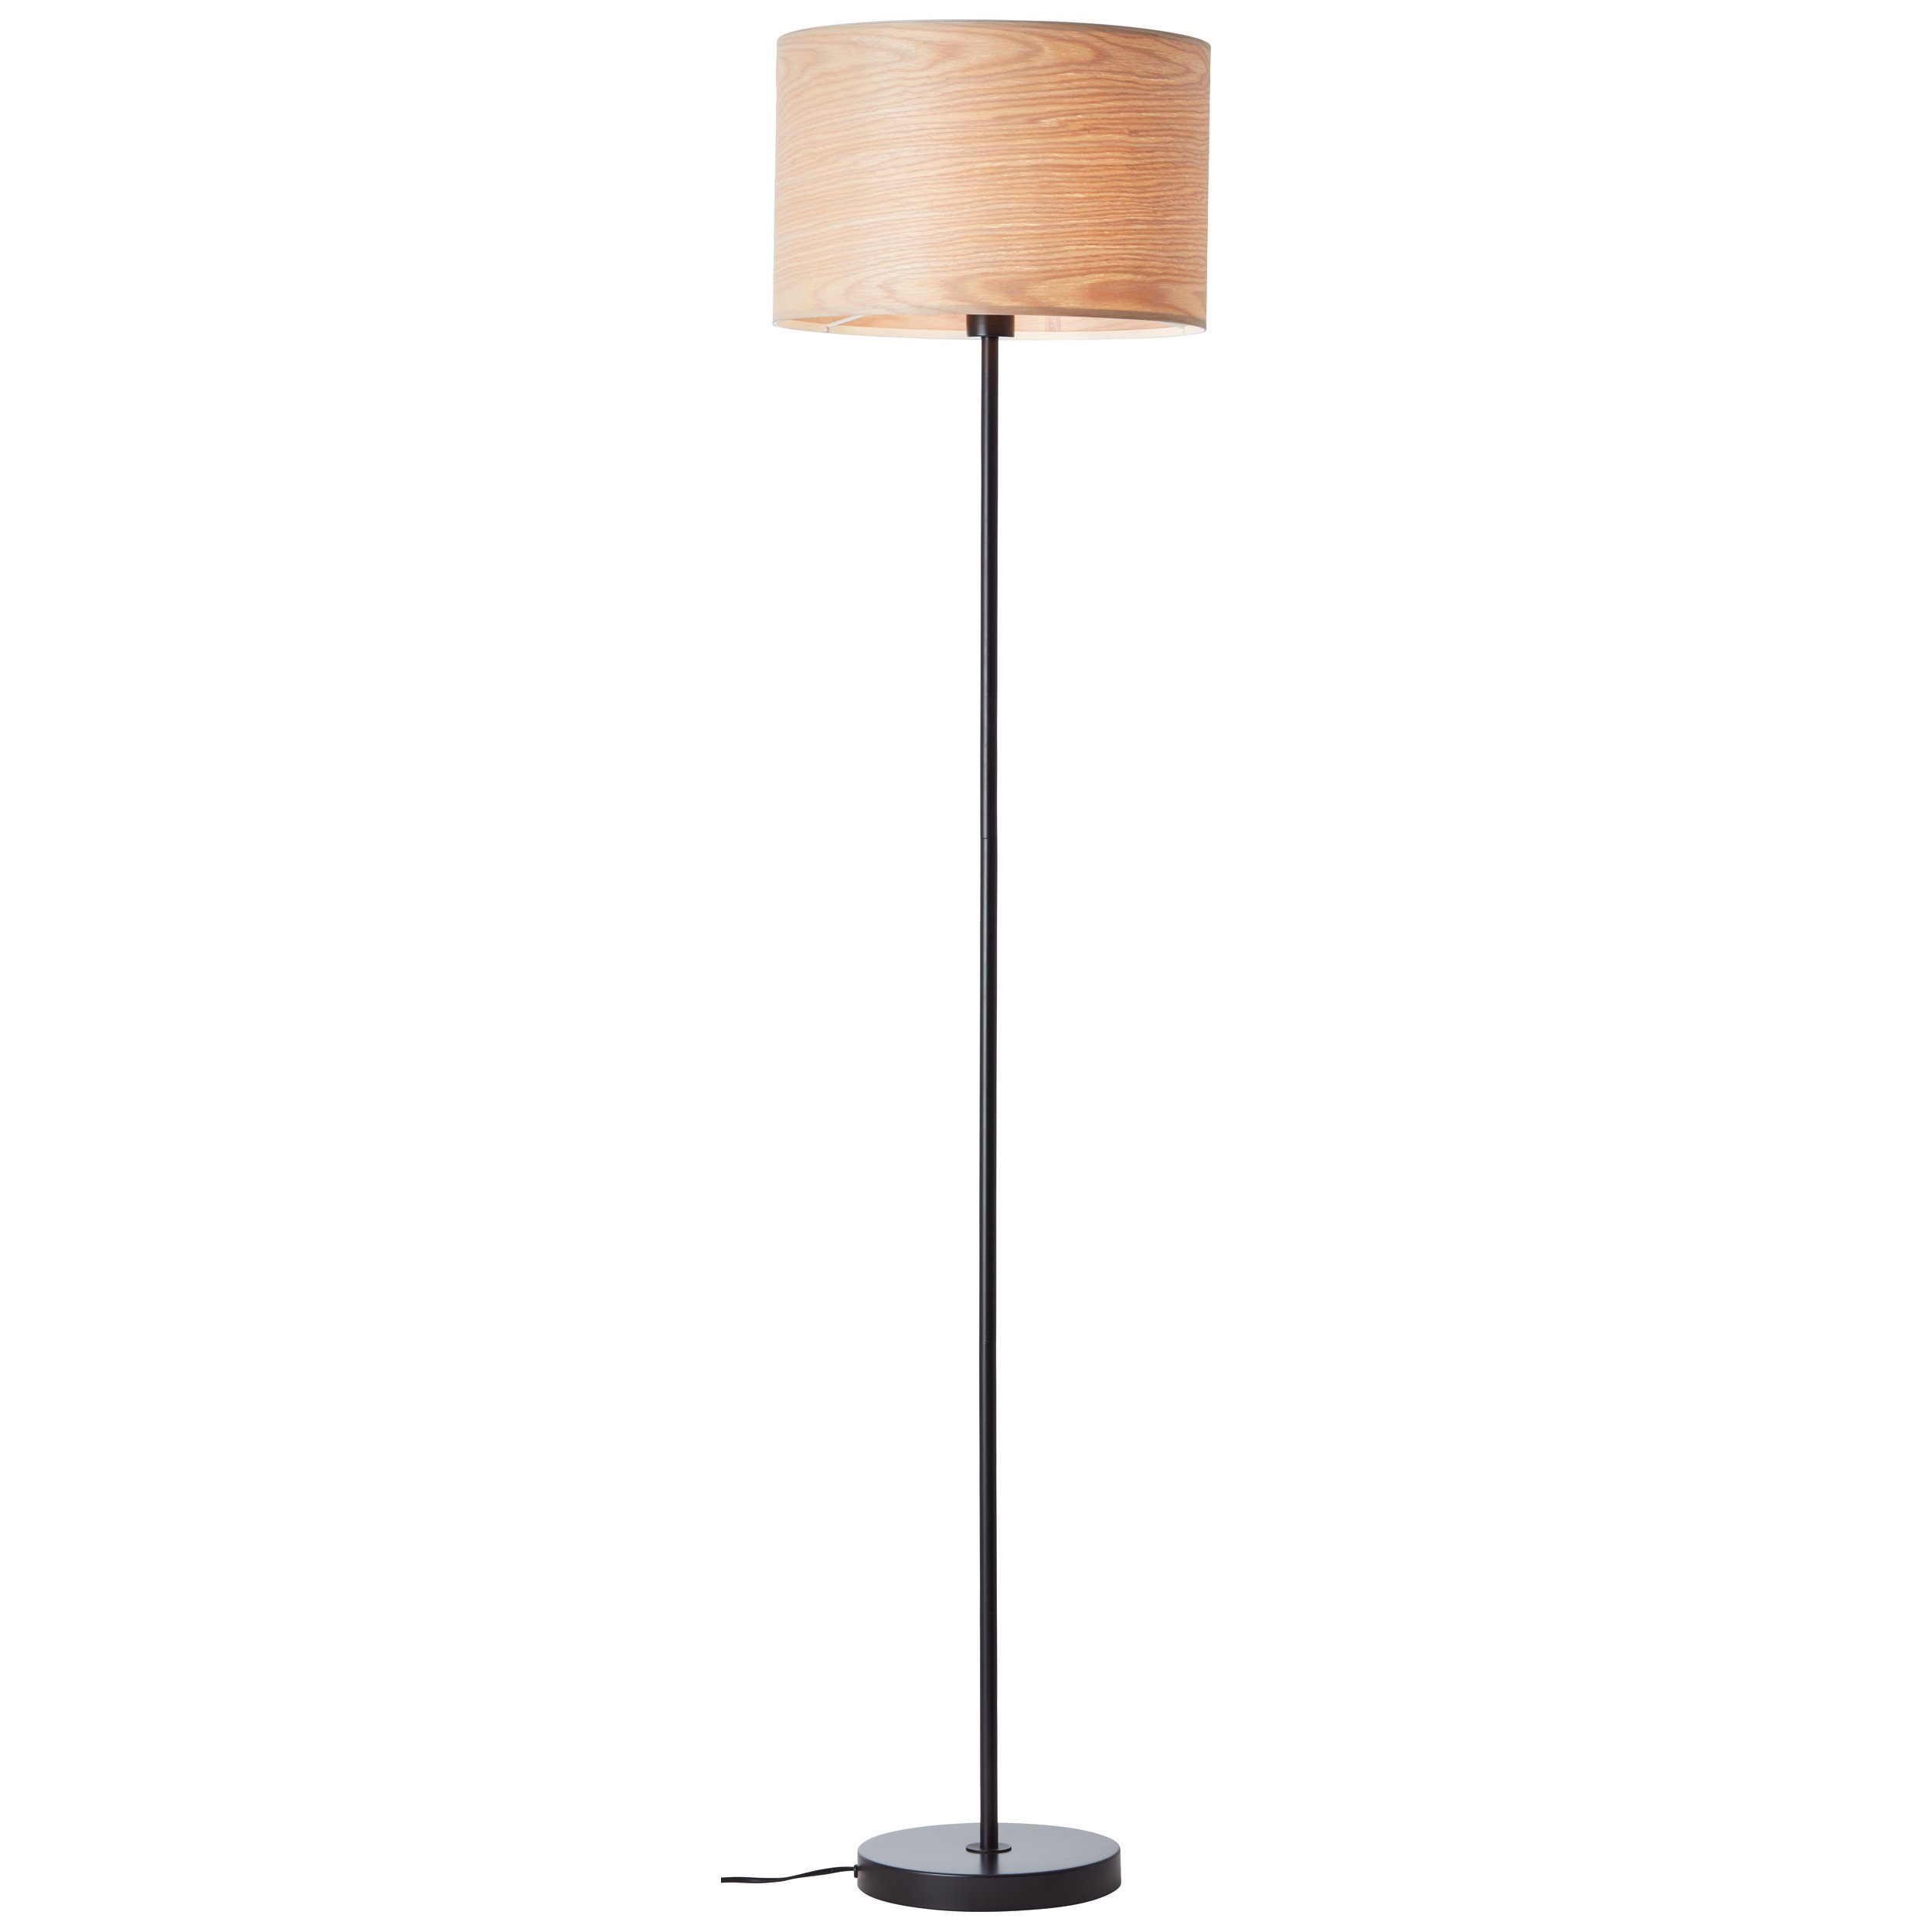 Höhe, 38 cm 52 161,5 W, Stehlampe, Metall/Holz max. Stehlampe, Lightbox ohne Ø cm, E27, Leuchtmittel,